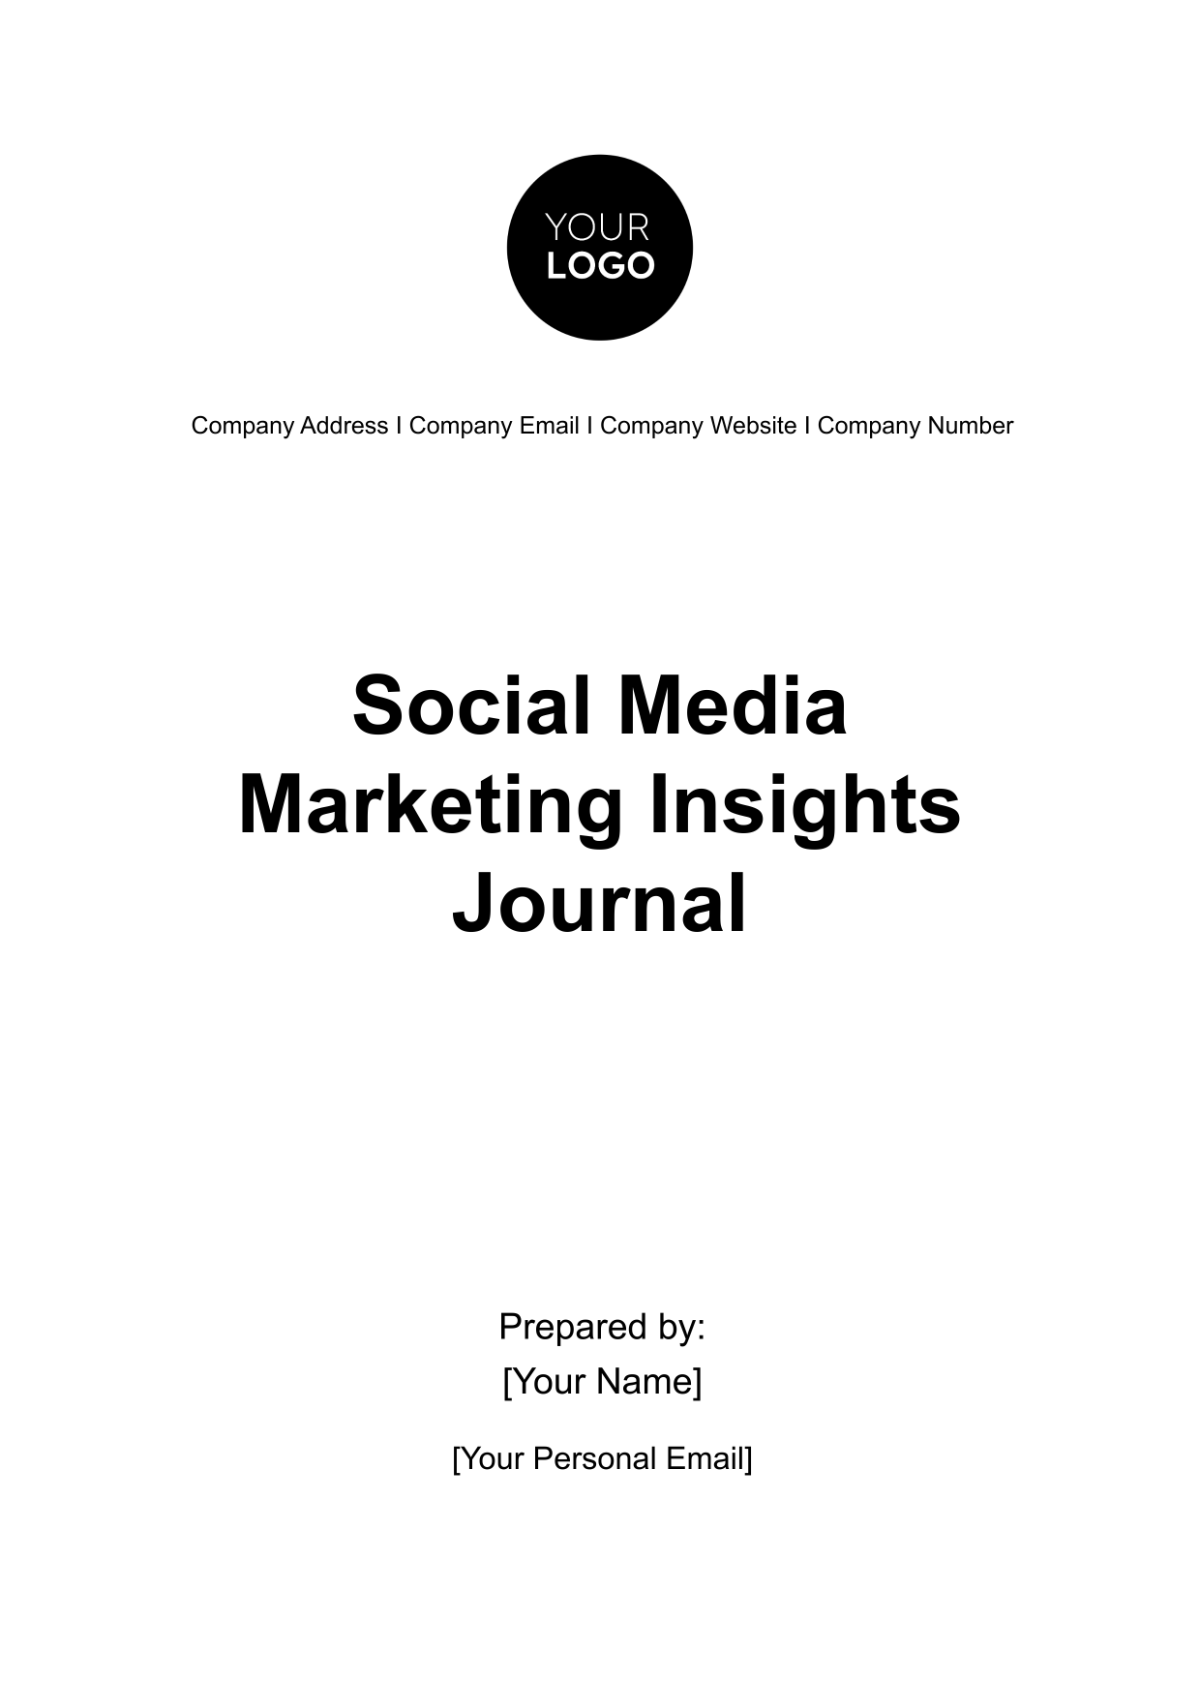 Social Media Marketing Insights Journal Template